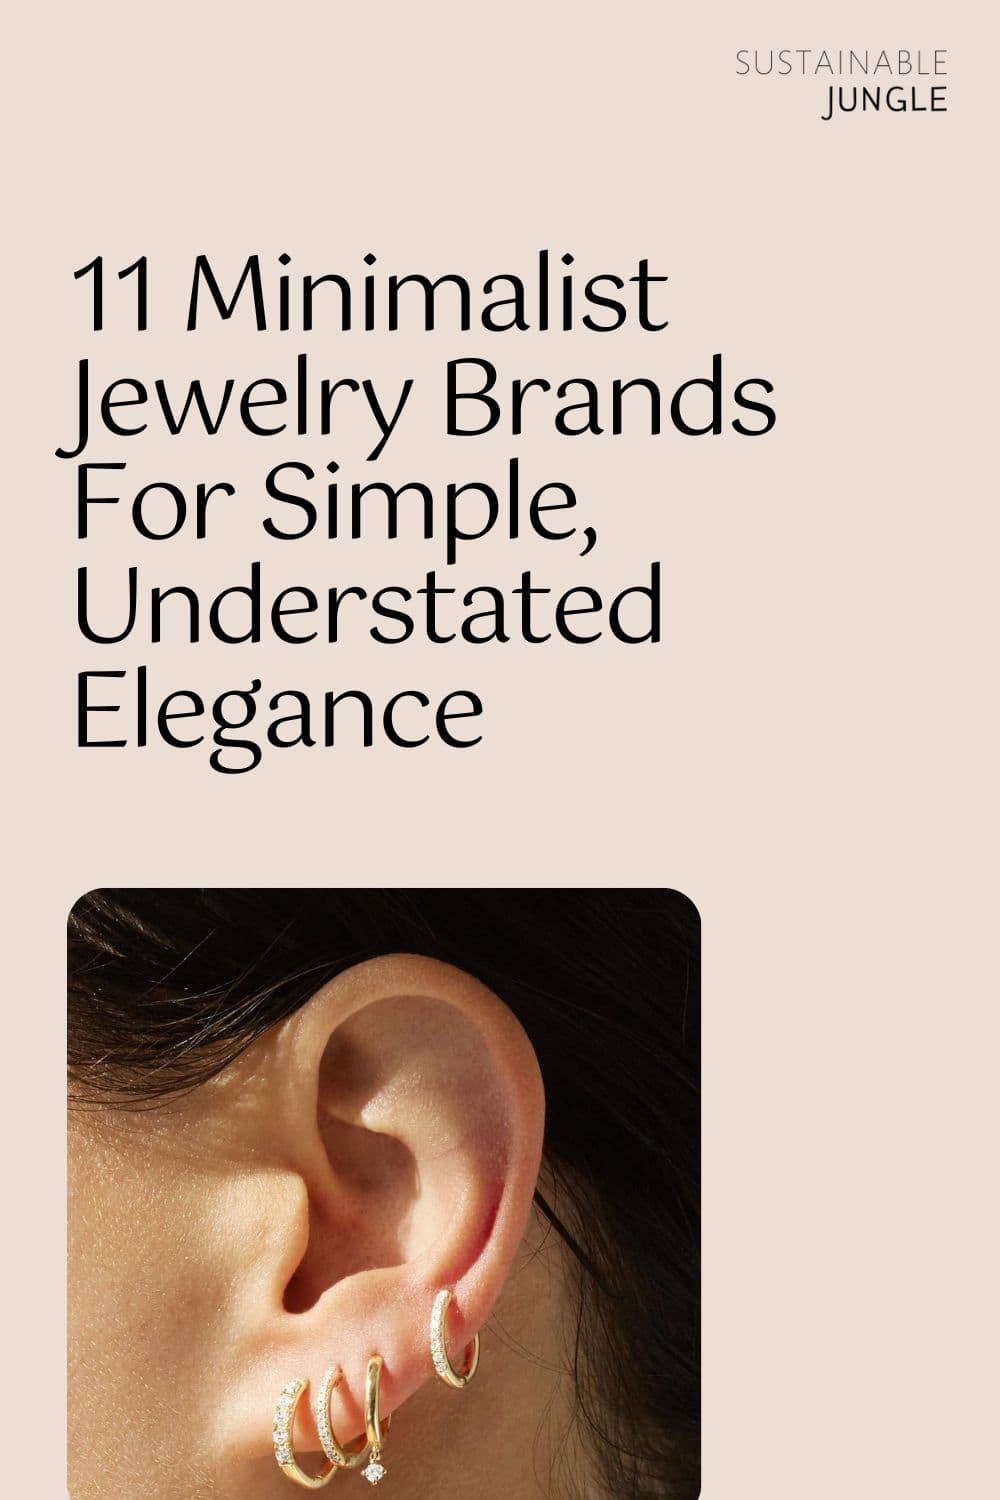 11 Minimalist Jewelry Brands For Simple, Understated Elegance Image by Catbird #minimalistjewelry #minimalistjewelrybrands #simplejewelry #simplejewelrydesign #simpleanddaintyjewelry #minimalistgoldjewelry #sustainablejungle